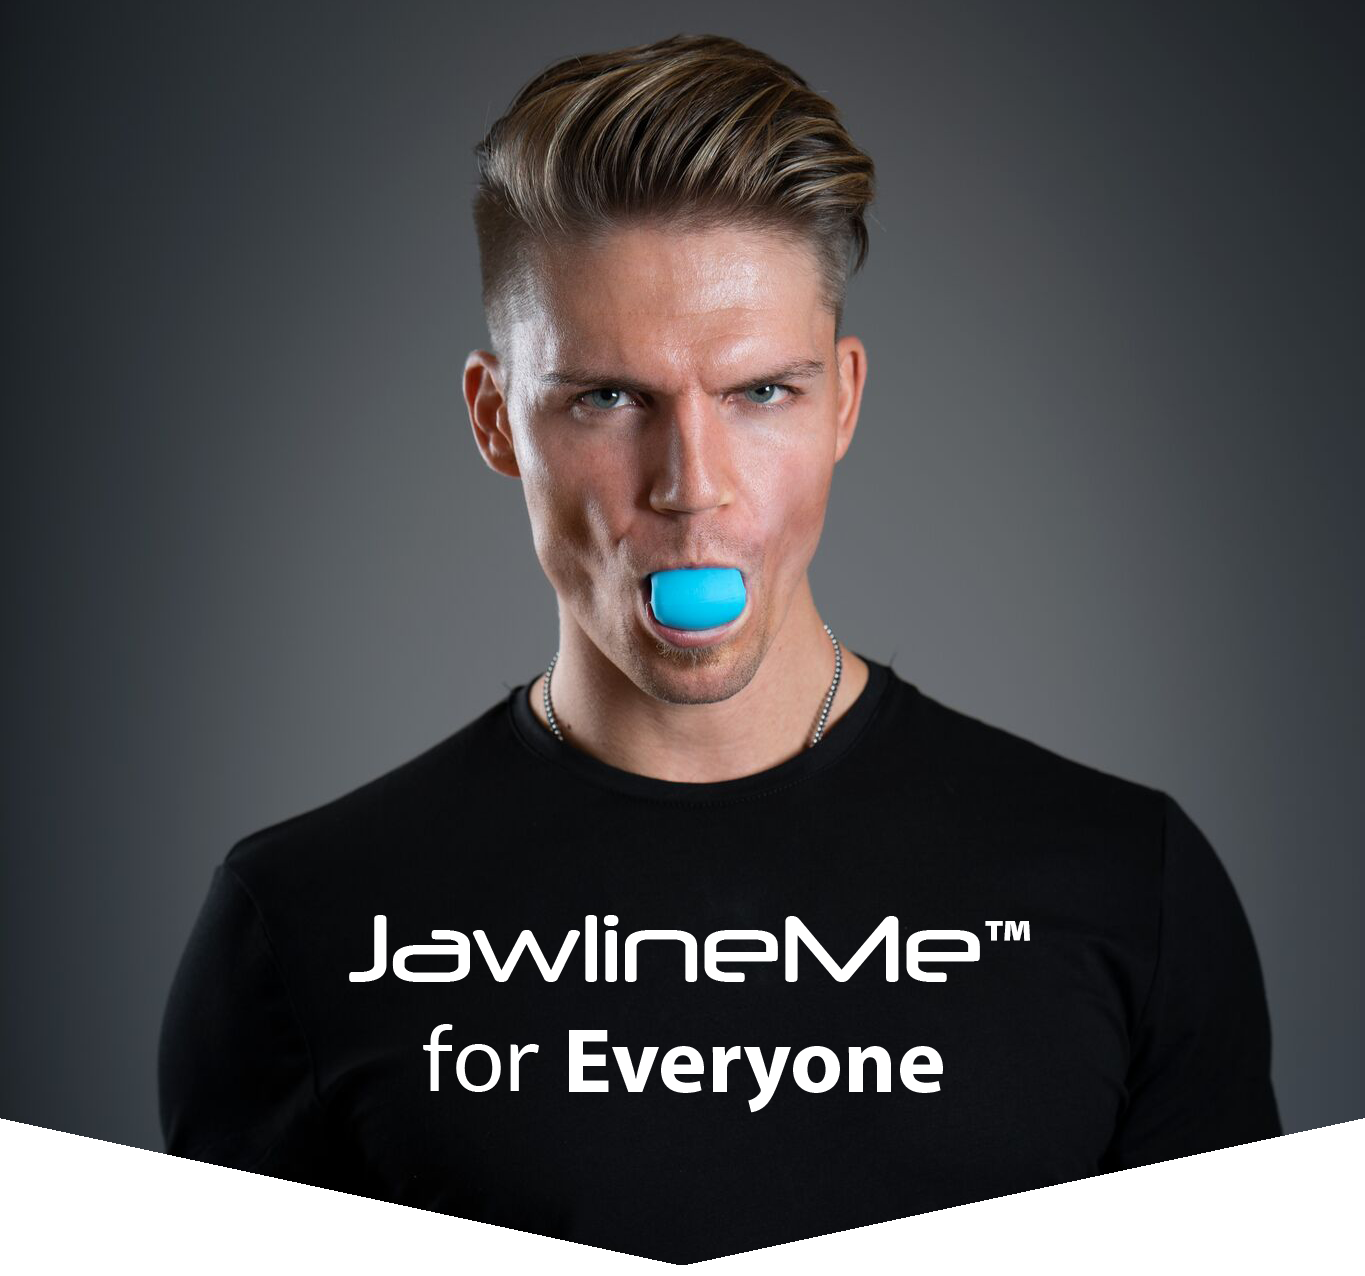 Jaw Trainer Face Exerciser – MyBodyHealth